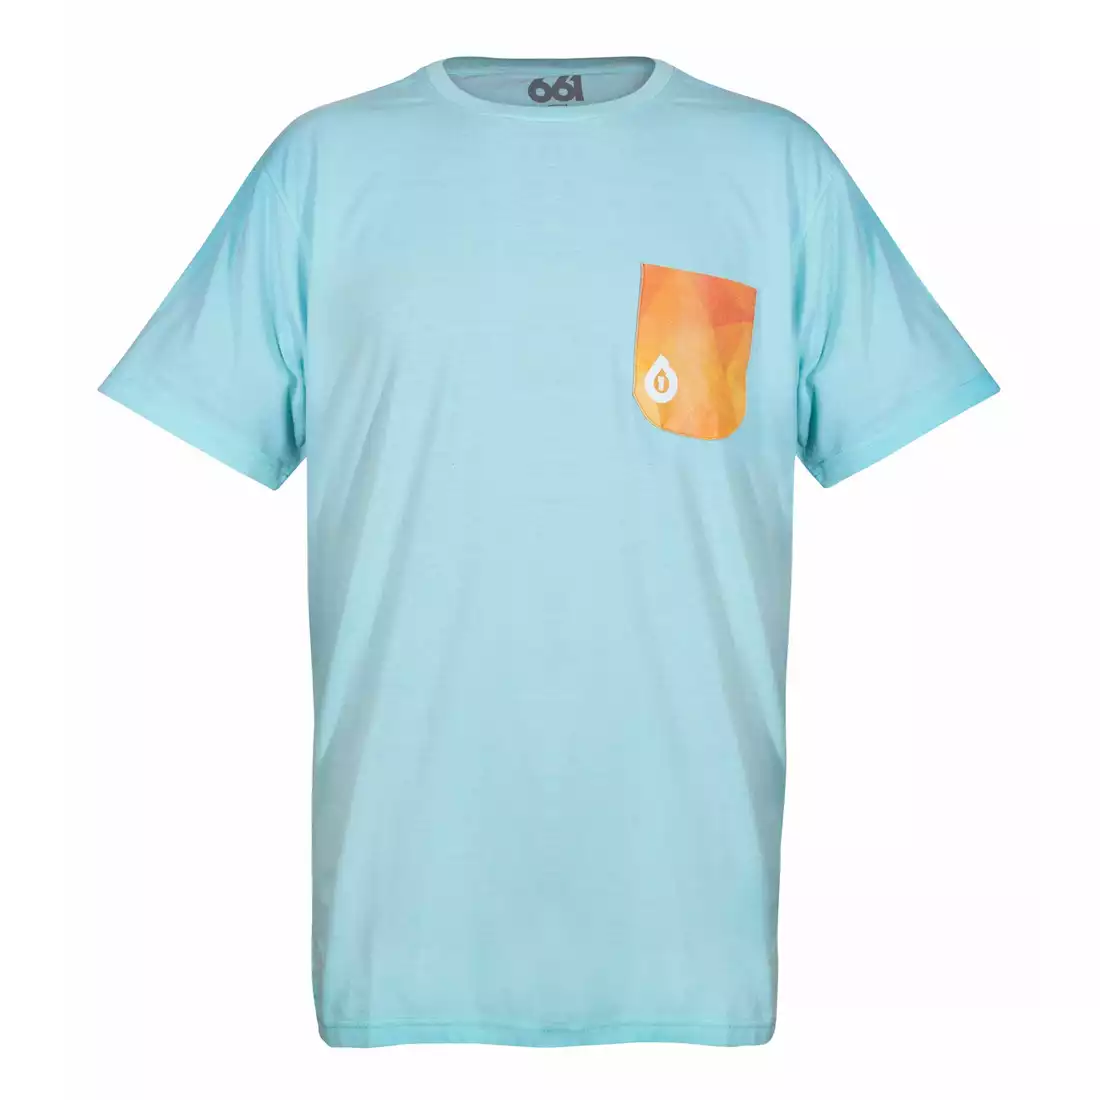 661 GEO POCKET Tee Herren-T-Shirt, Blau